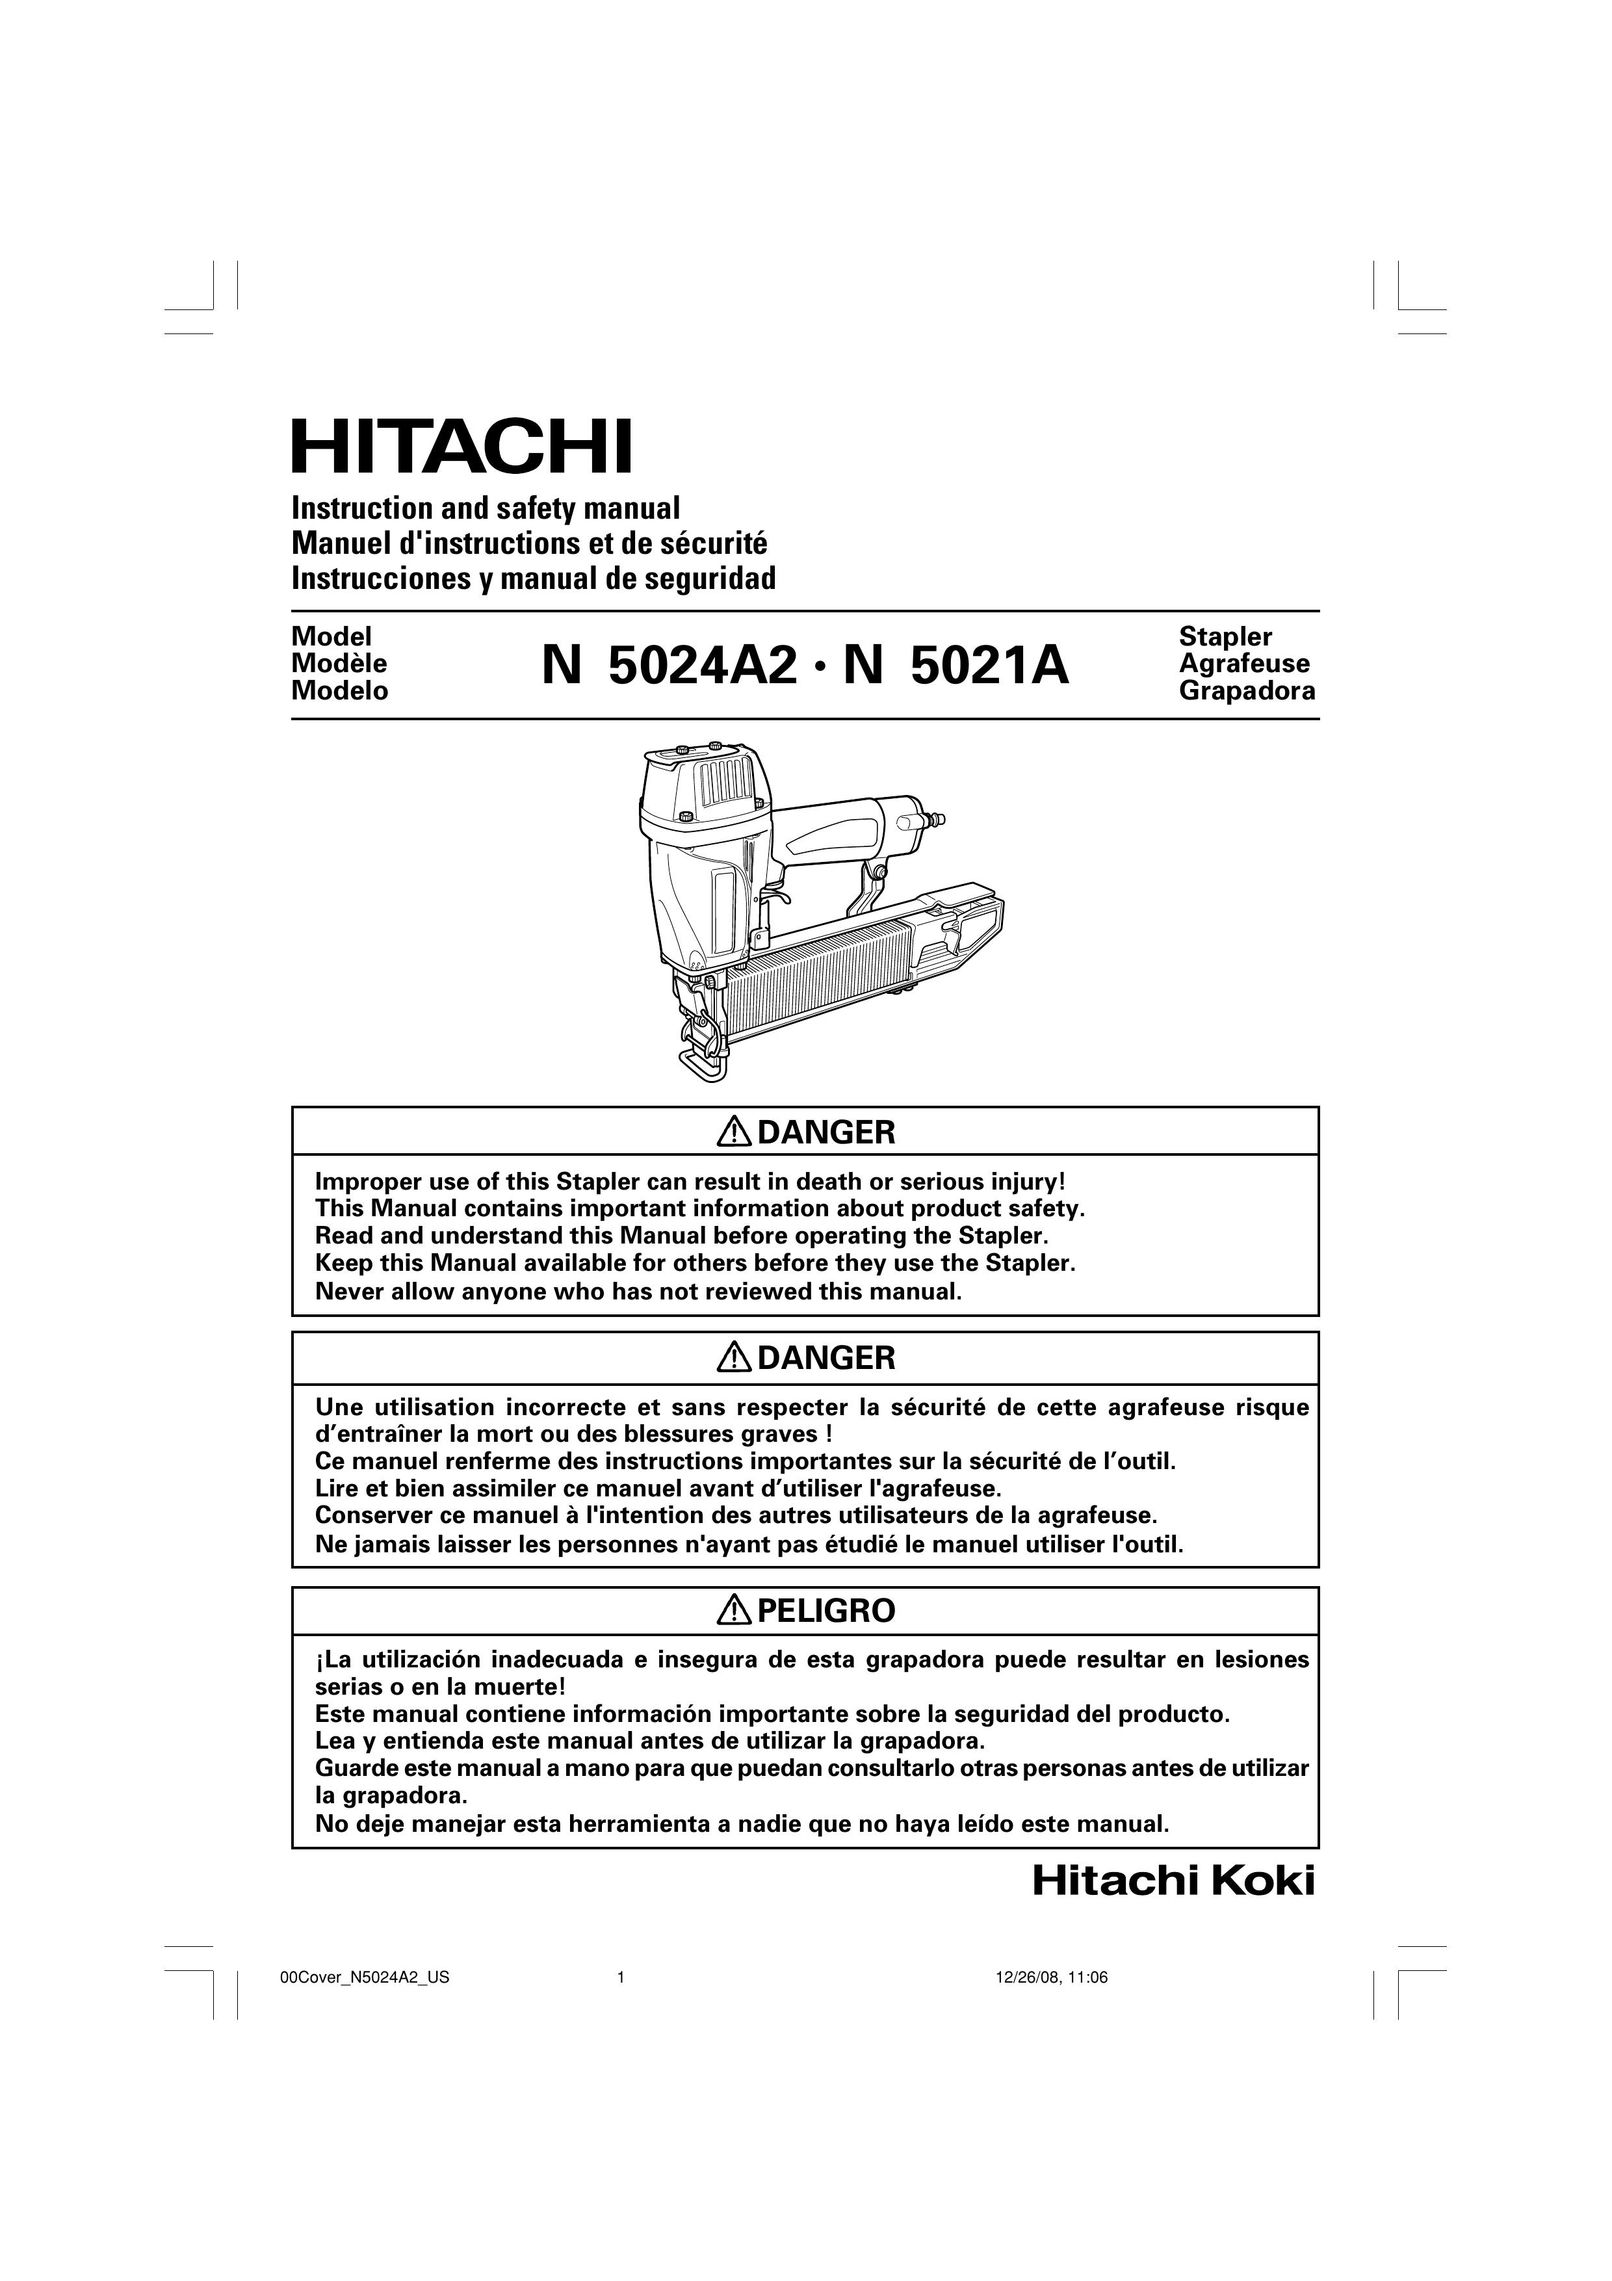 Hitachi Koki USA N 5021A Staple Gun User Manual